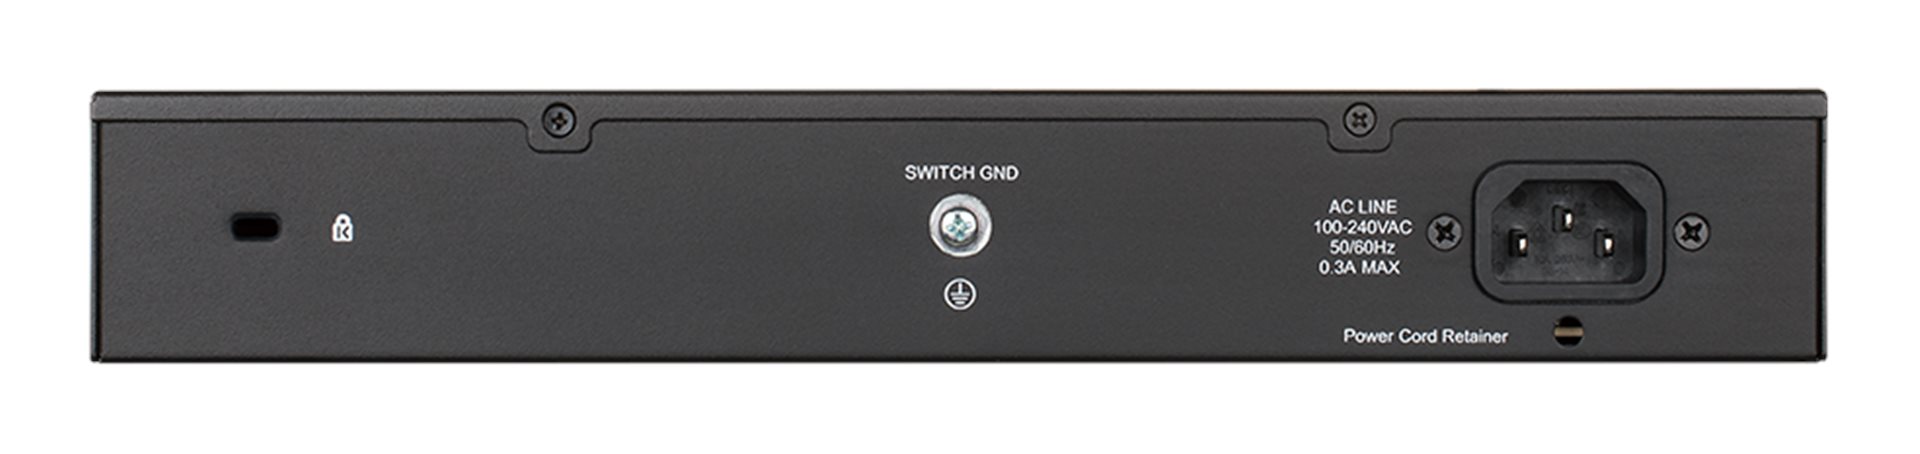 D-Link DGS-1100-24V2 D-Link DGS-1100-24V2 24-port Gigabit Smart switch